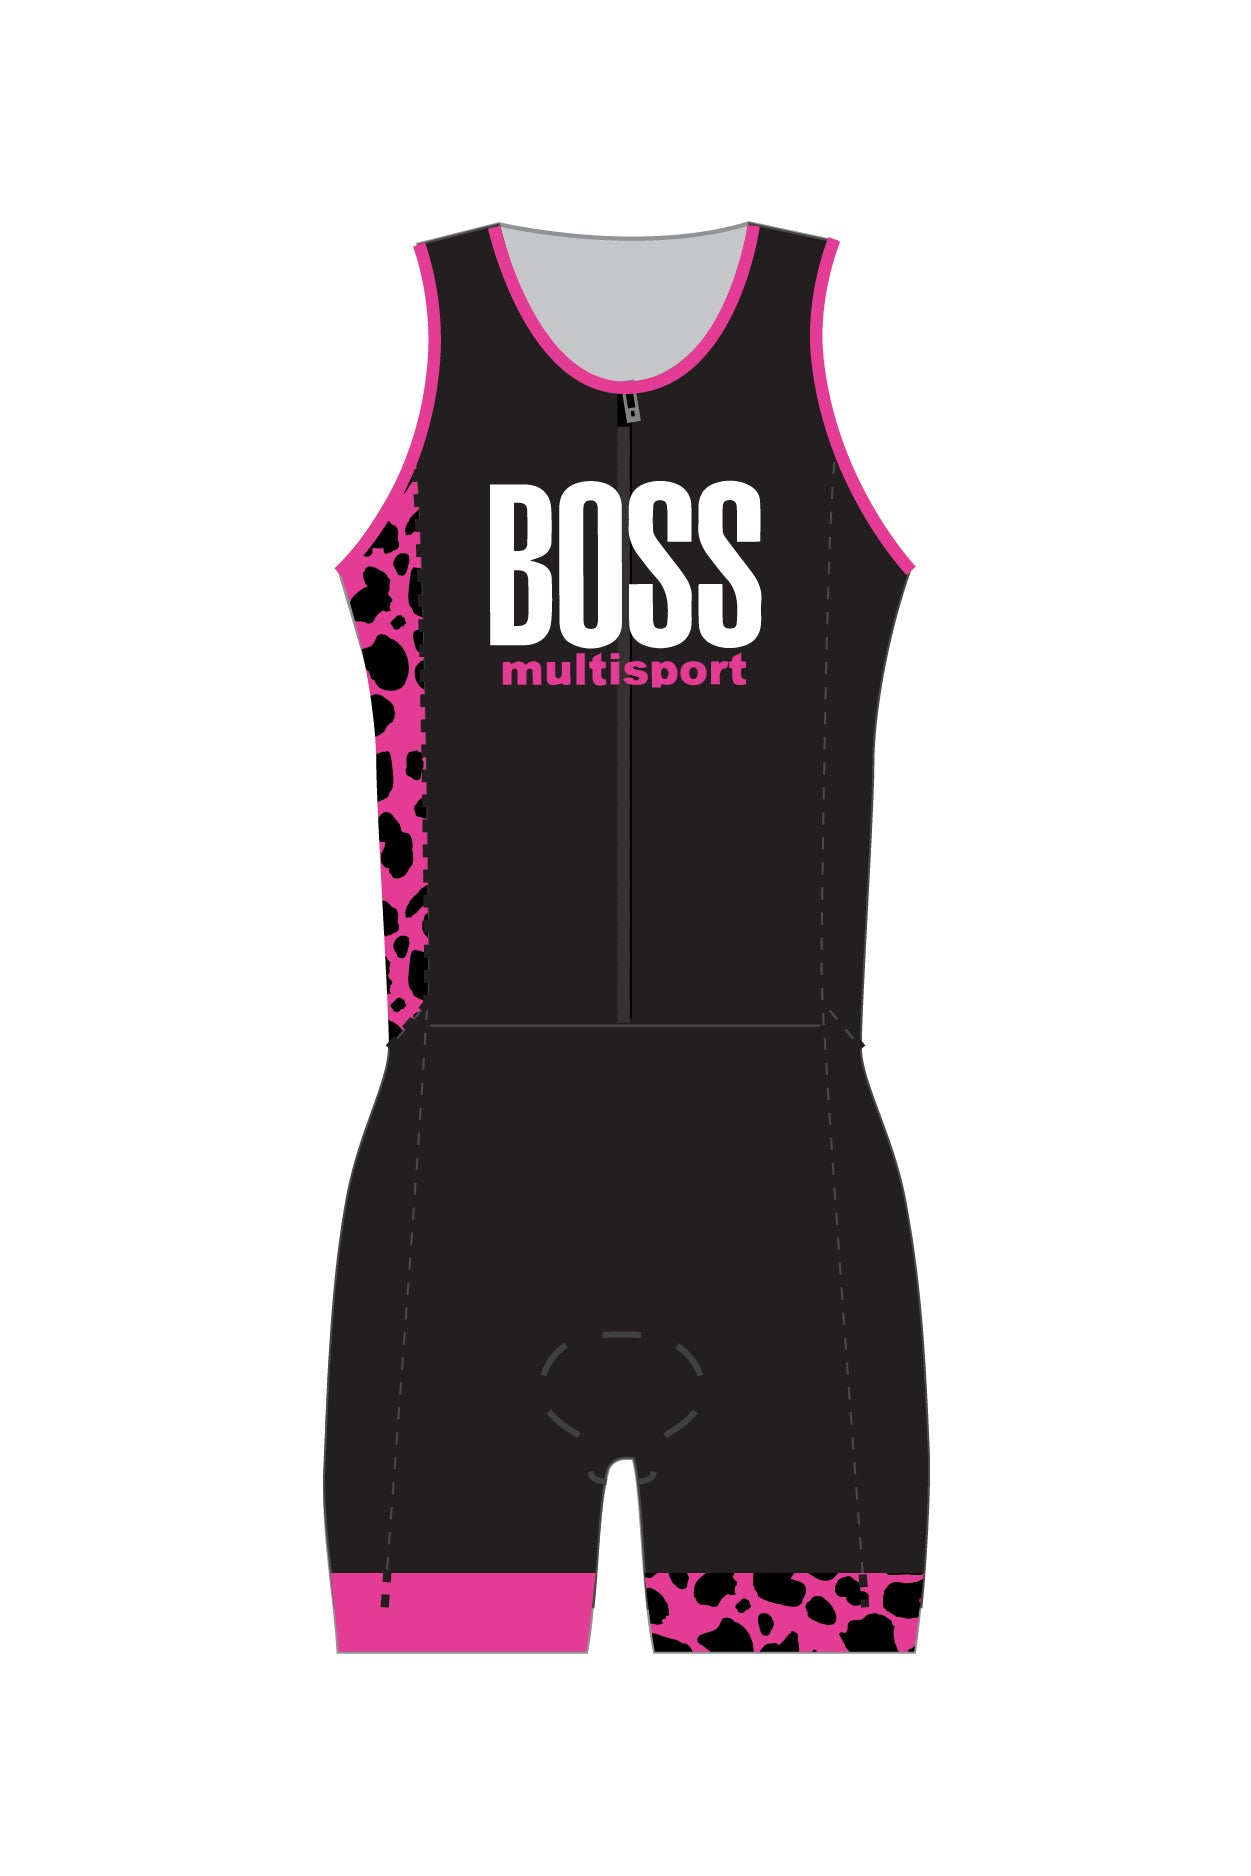 Boss Multisport Women's Zip Tri Suit